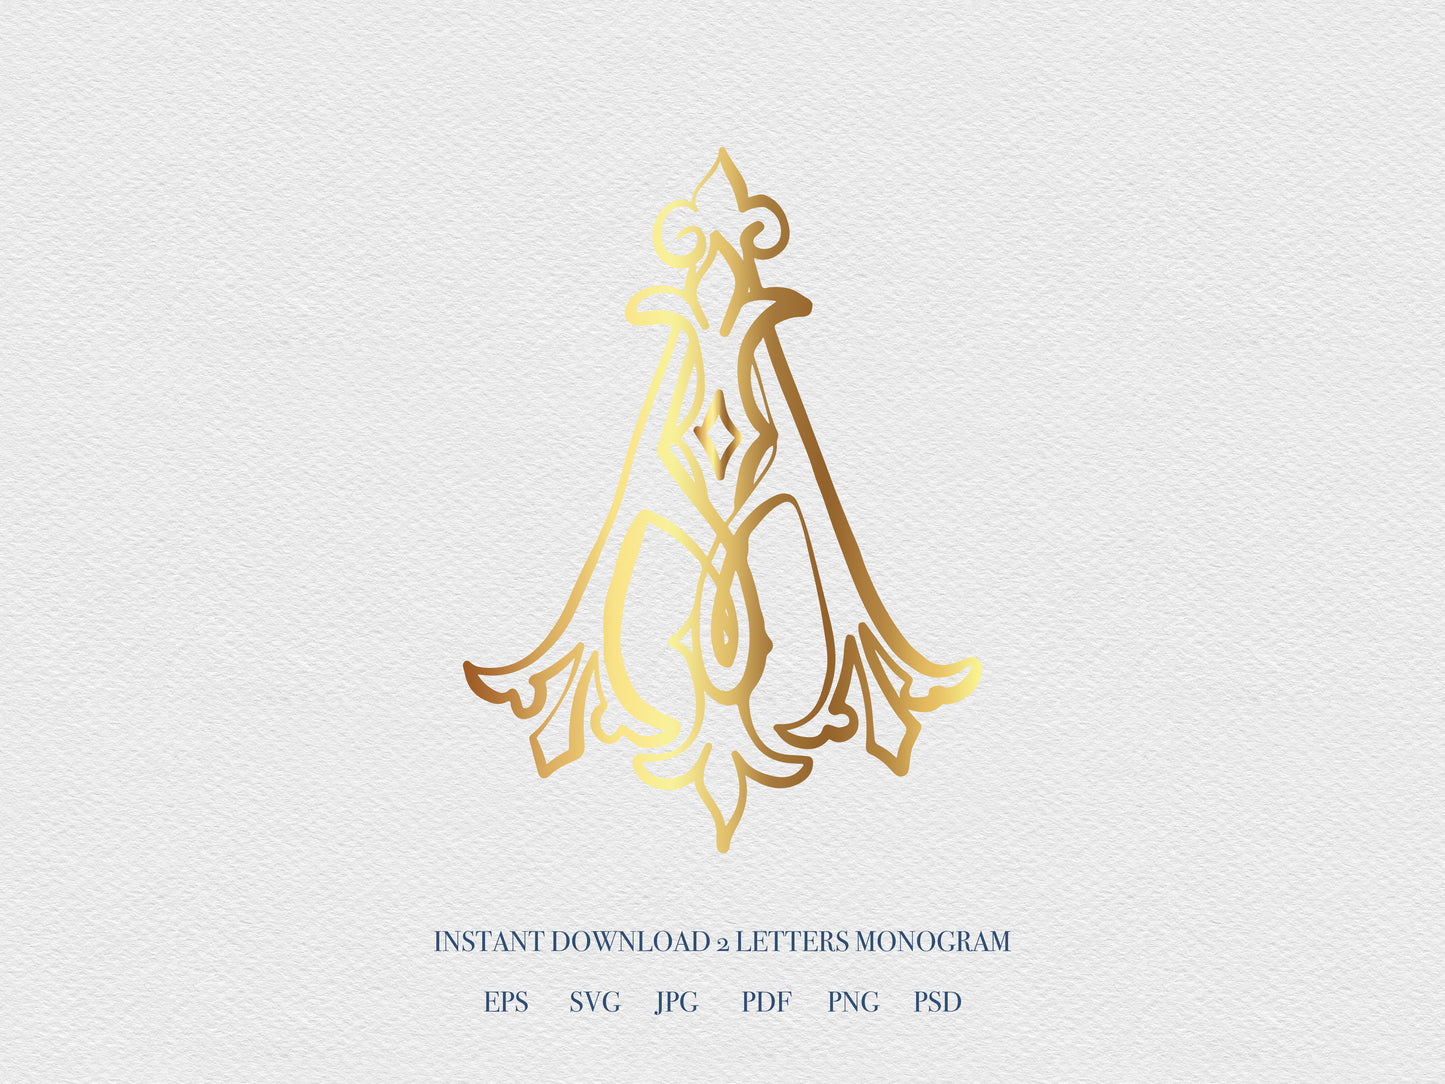 2 Letter Monogram with Letters AI IA | Digital Download - Wedding Monogram SVG, Personal Logo, Wedding Logo for Wedding Invitations